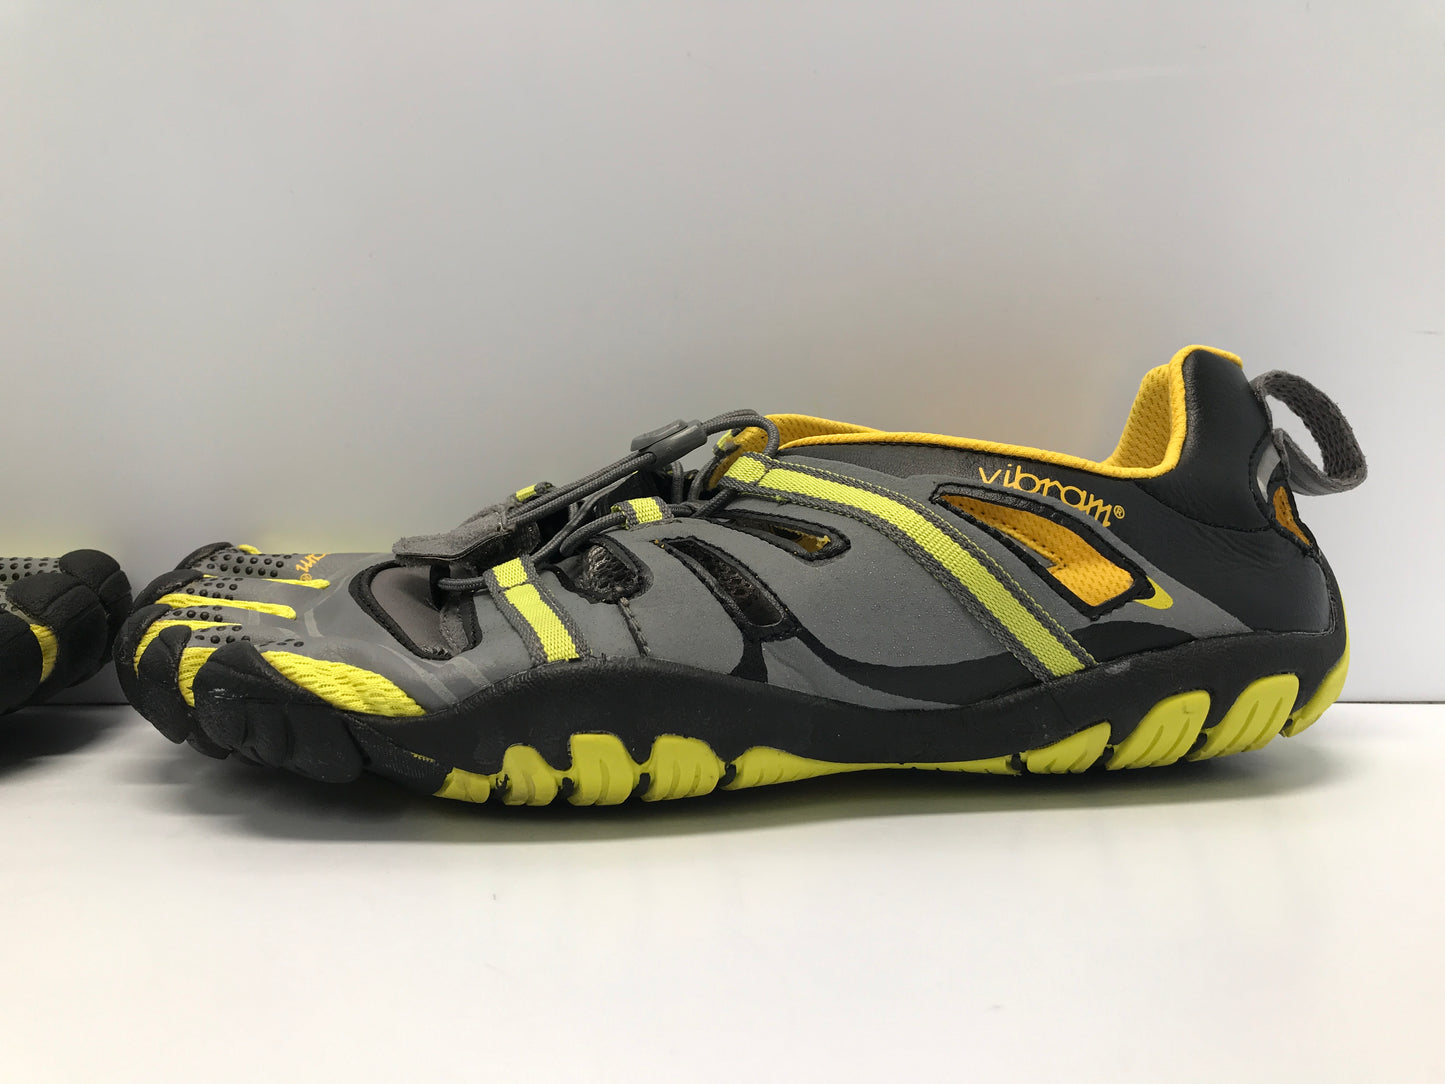 Vibram FiveFingers Men's Size 8.5 Walking Hiking Beach Shoes Grey Yellow Like New